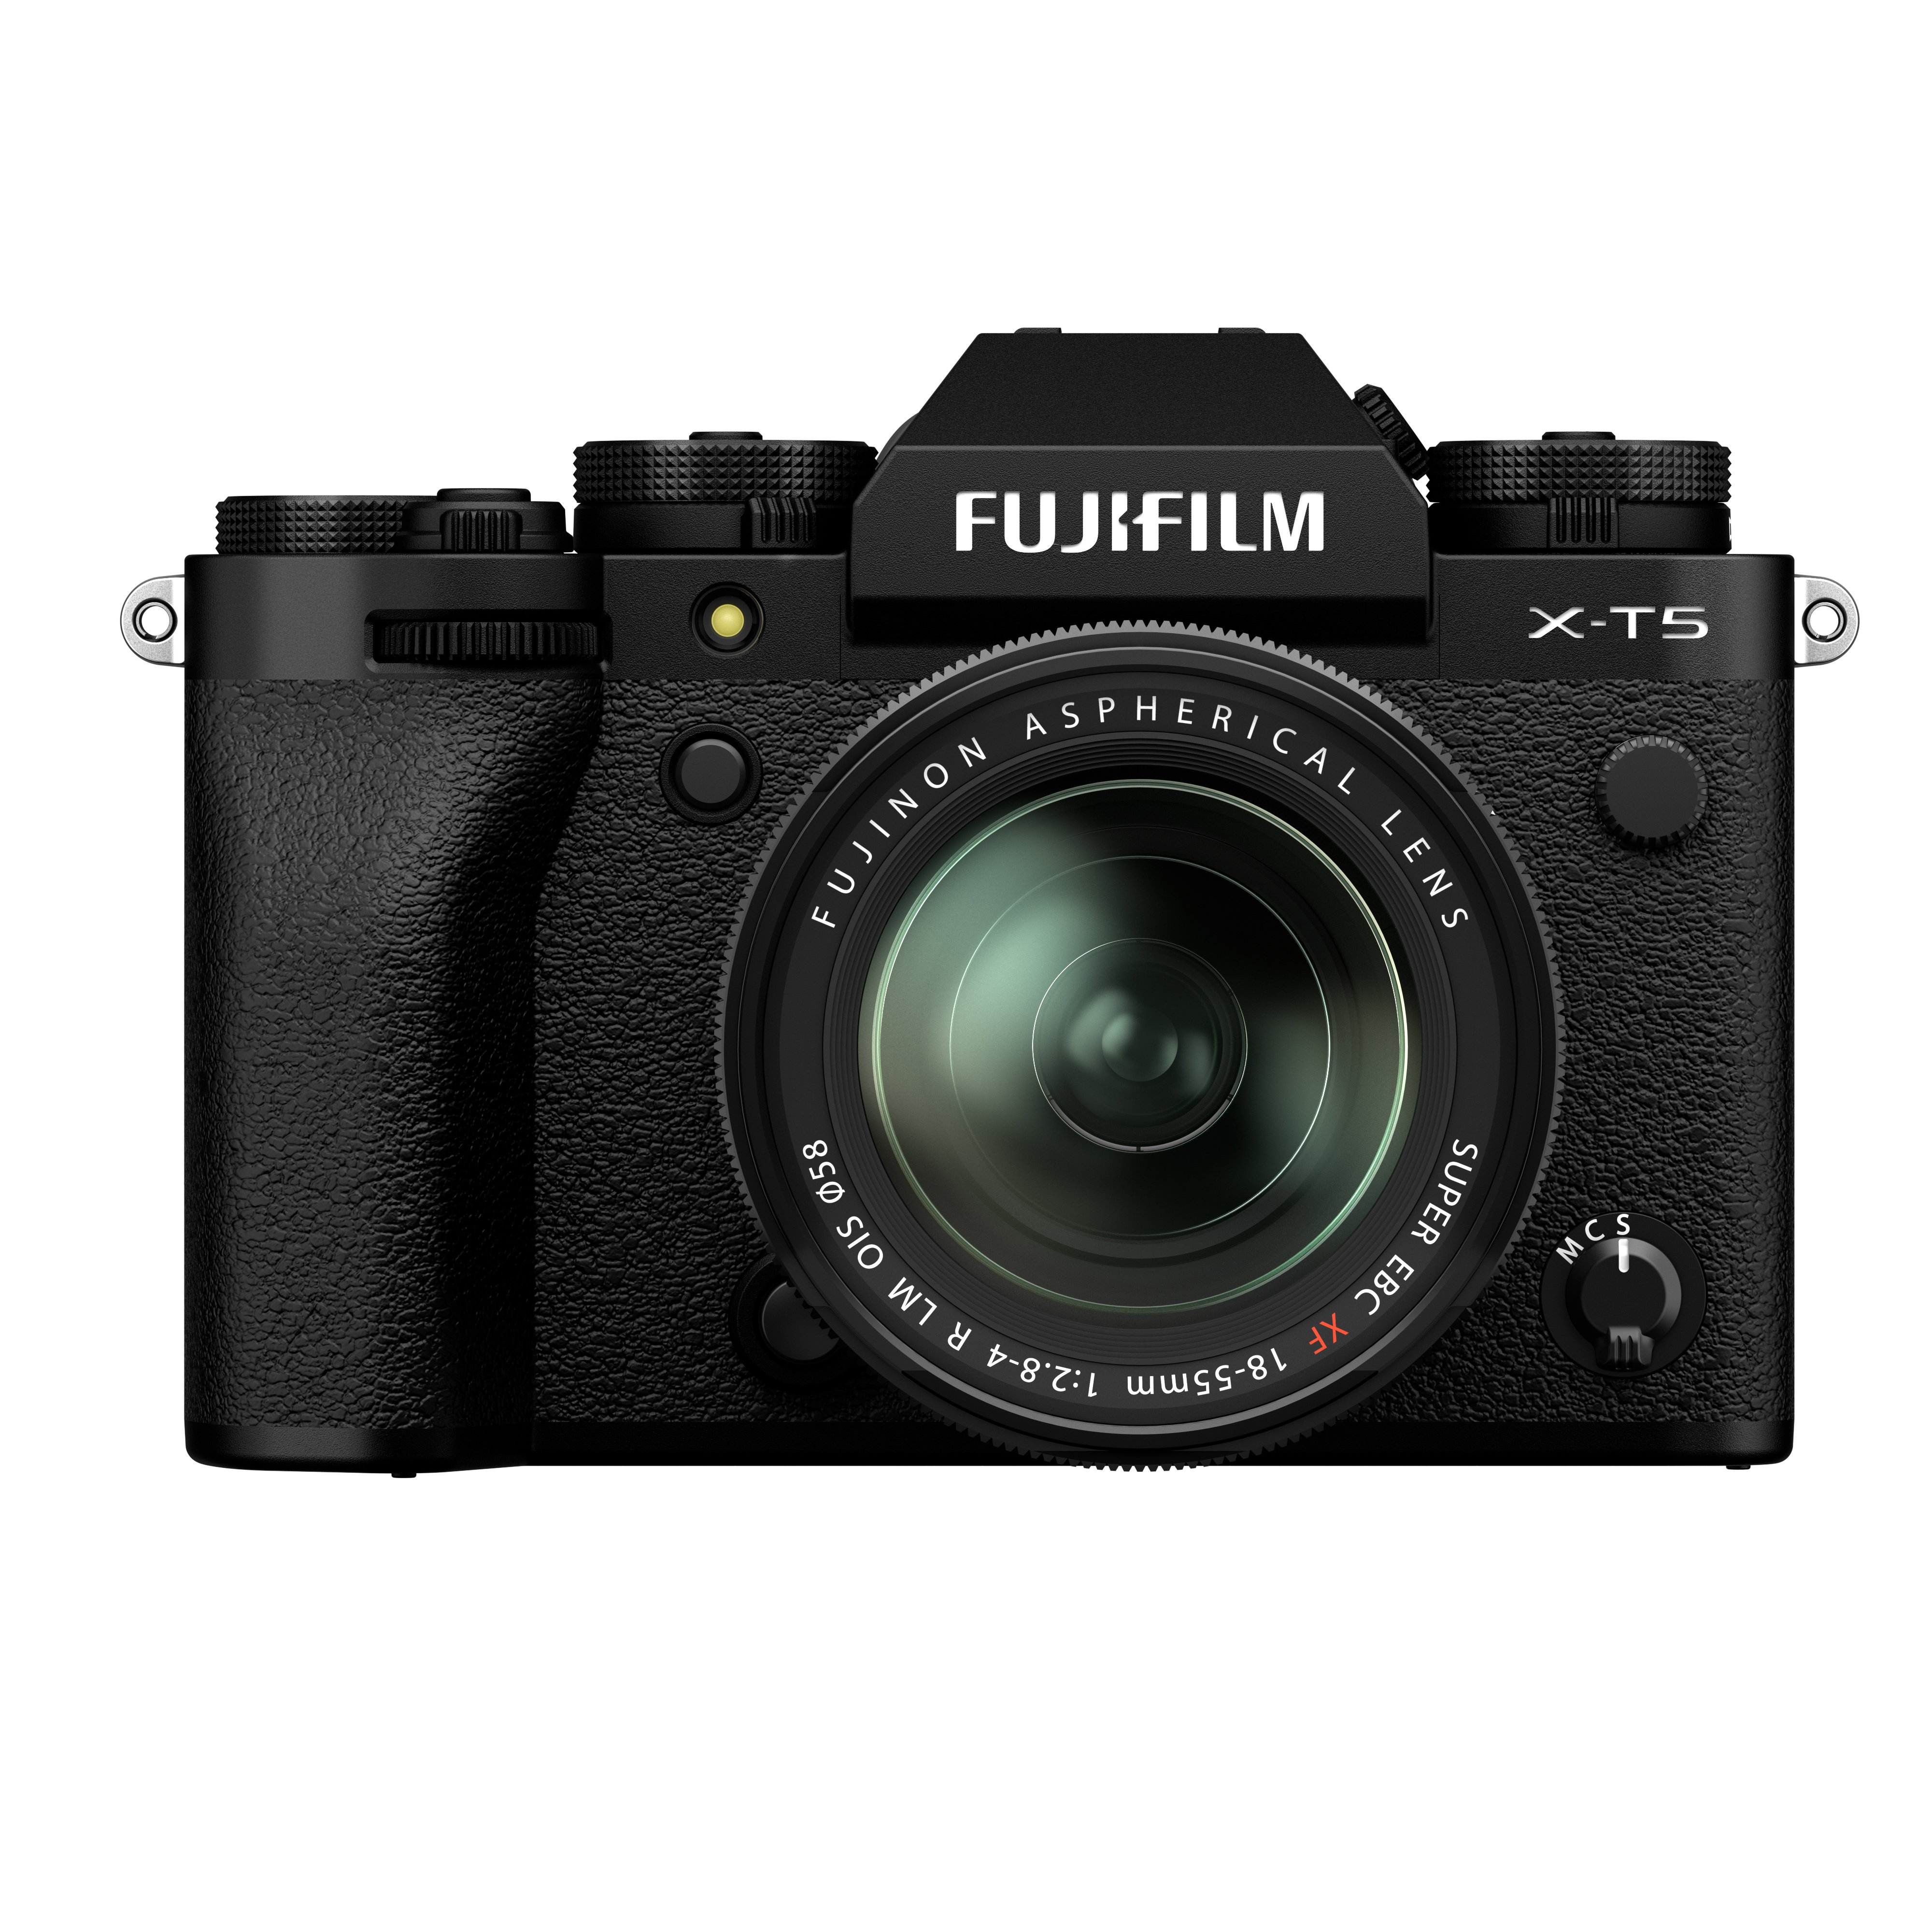 Fujifilm X-T5 Mirrorless Camera (Black) with XF 18-55mm F2.8-4 Lens